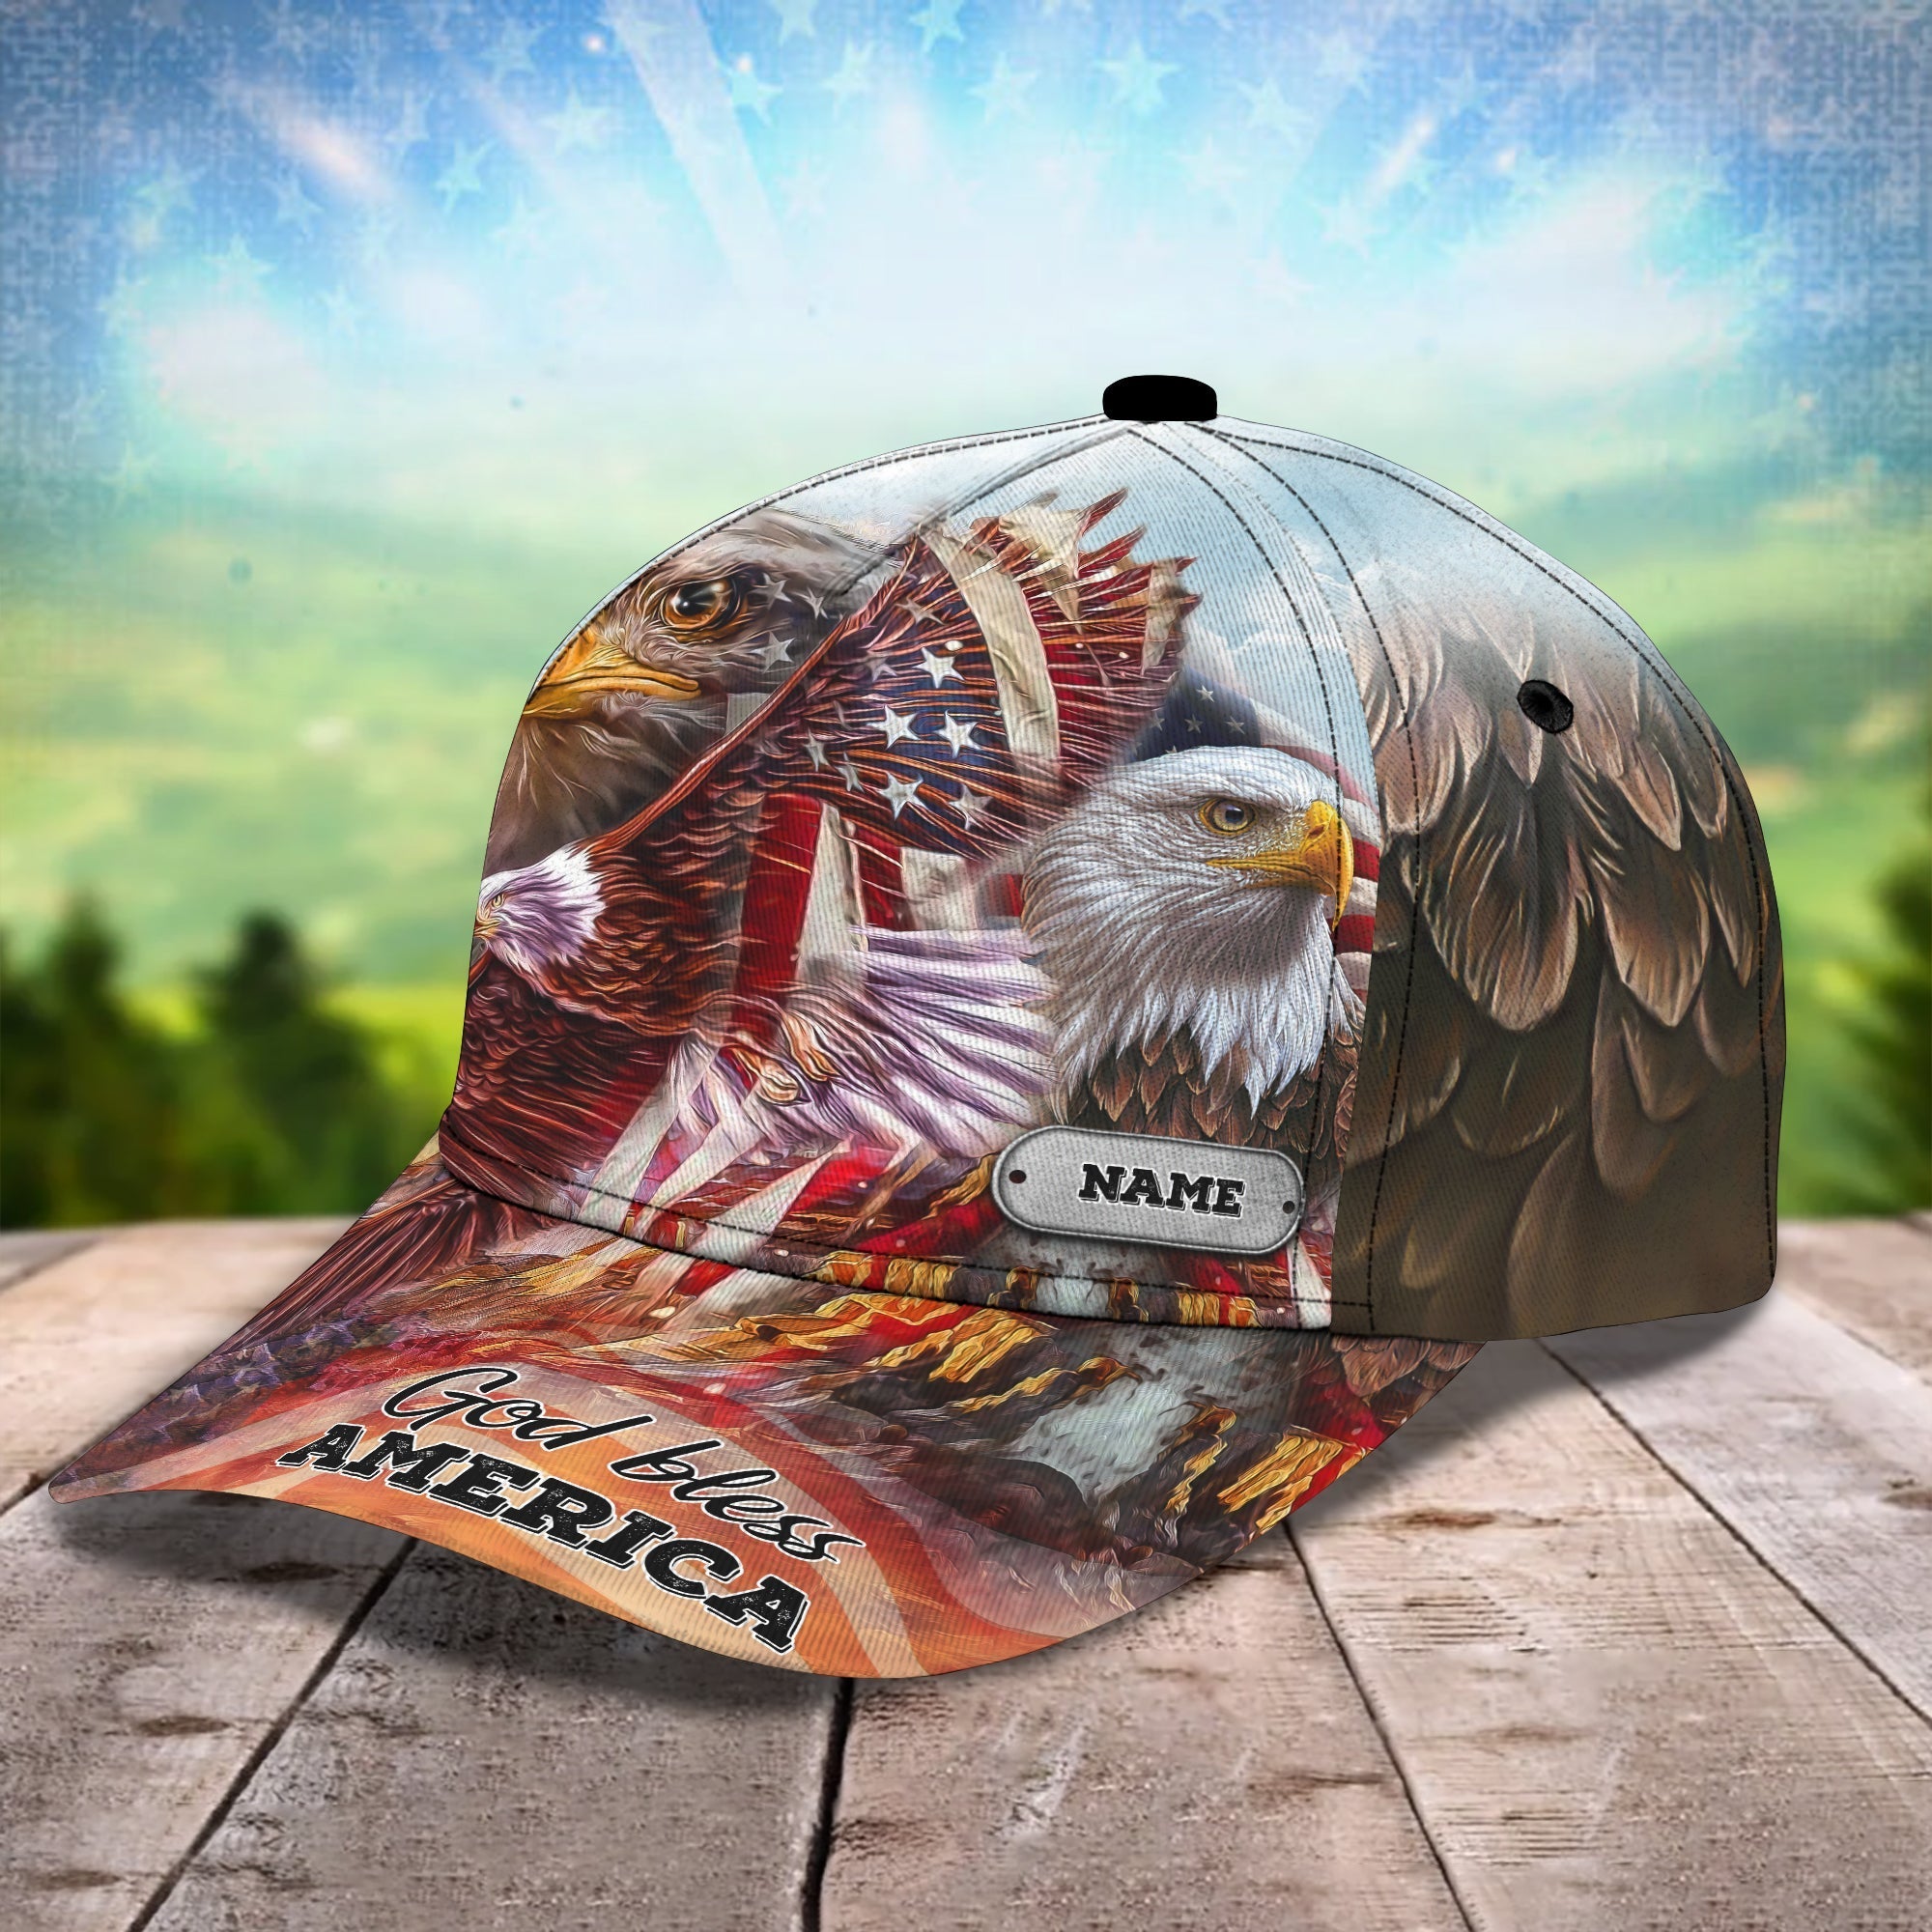 Customized America Eagle 3D Full Printed Baseball Cap Hat/ God Bless America Classic Cap Hat